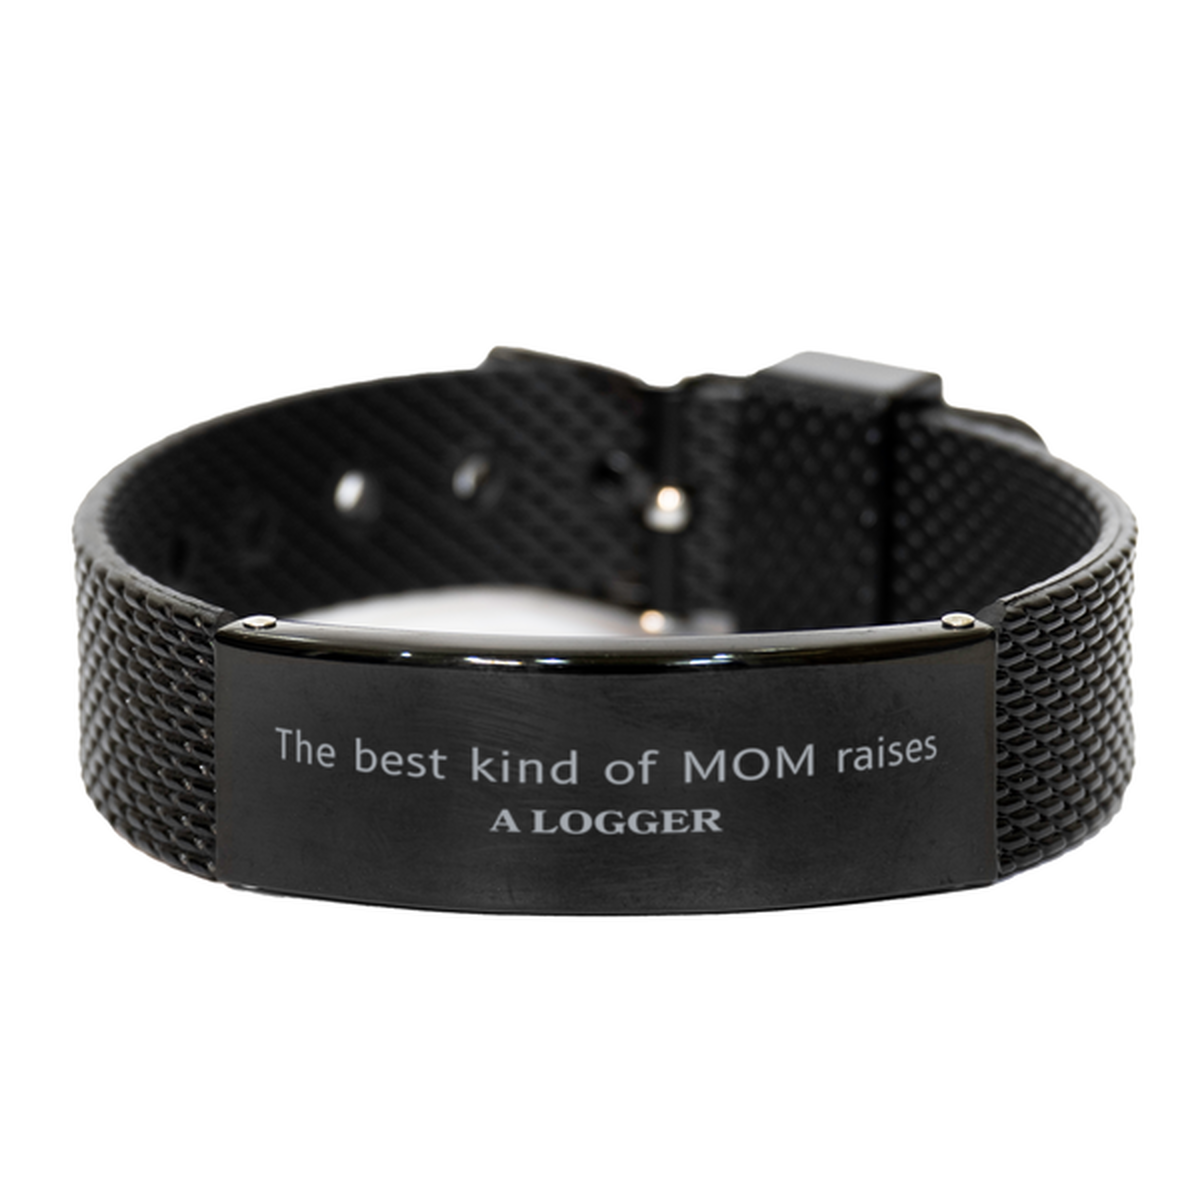 Funny Logger Mom Gifts, The best kind of MOM raises Logger, Birthday, Mother's Day, Cute Black Shark Mesh Bracelet for Logger Mom